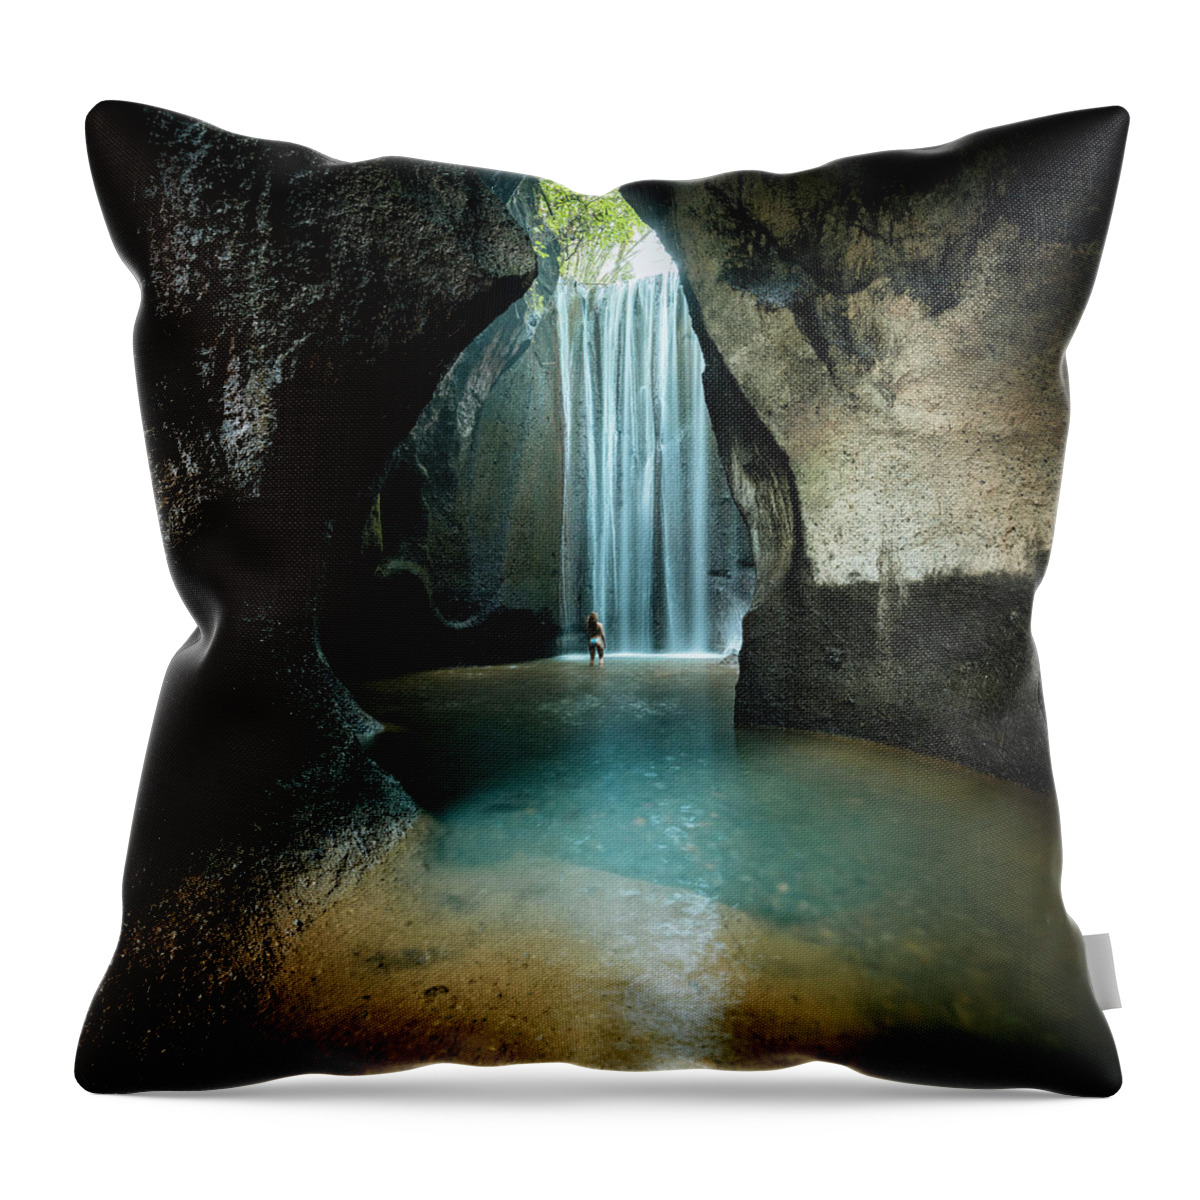 Estock Throw Pillow featuring the digital art Indonesia, Bali Island, Bali, Tukad Cepung Waterfall by Ben Pipe